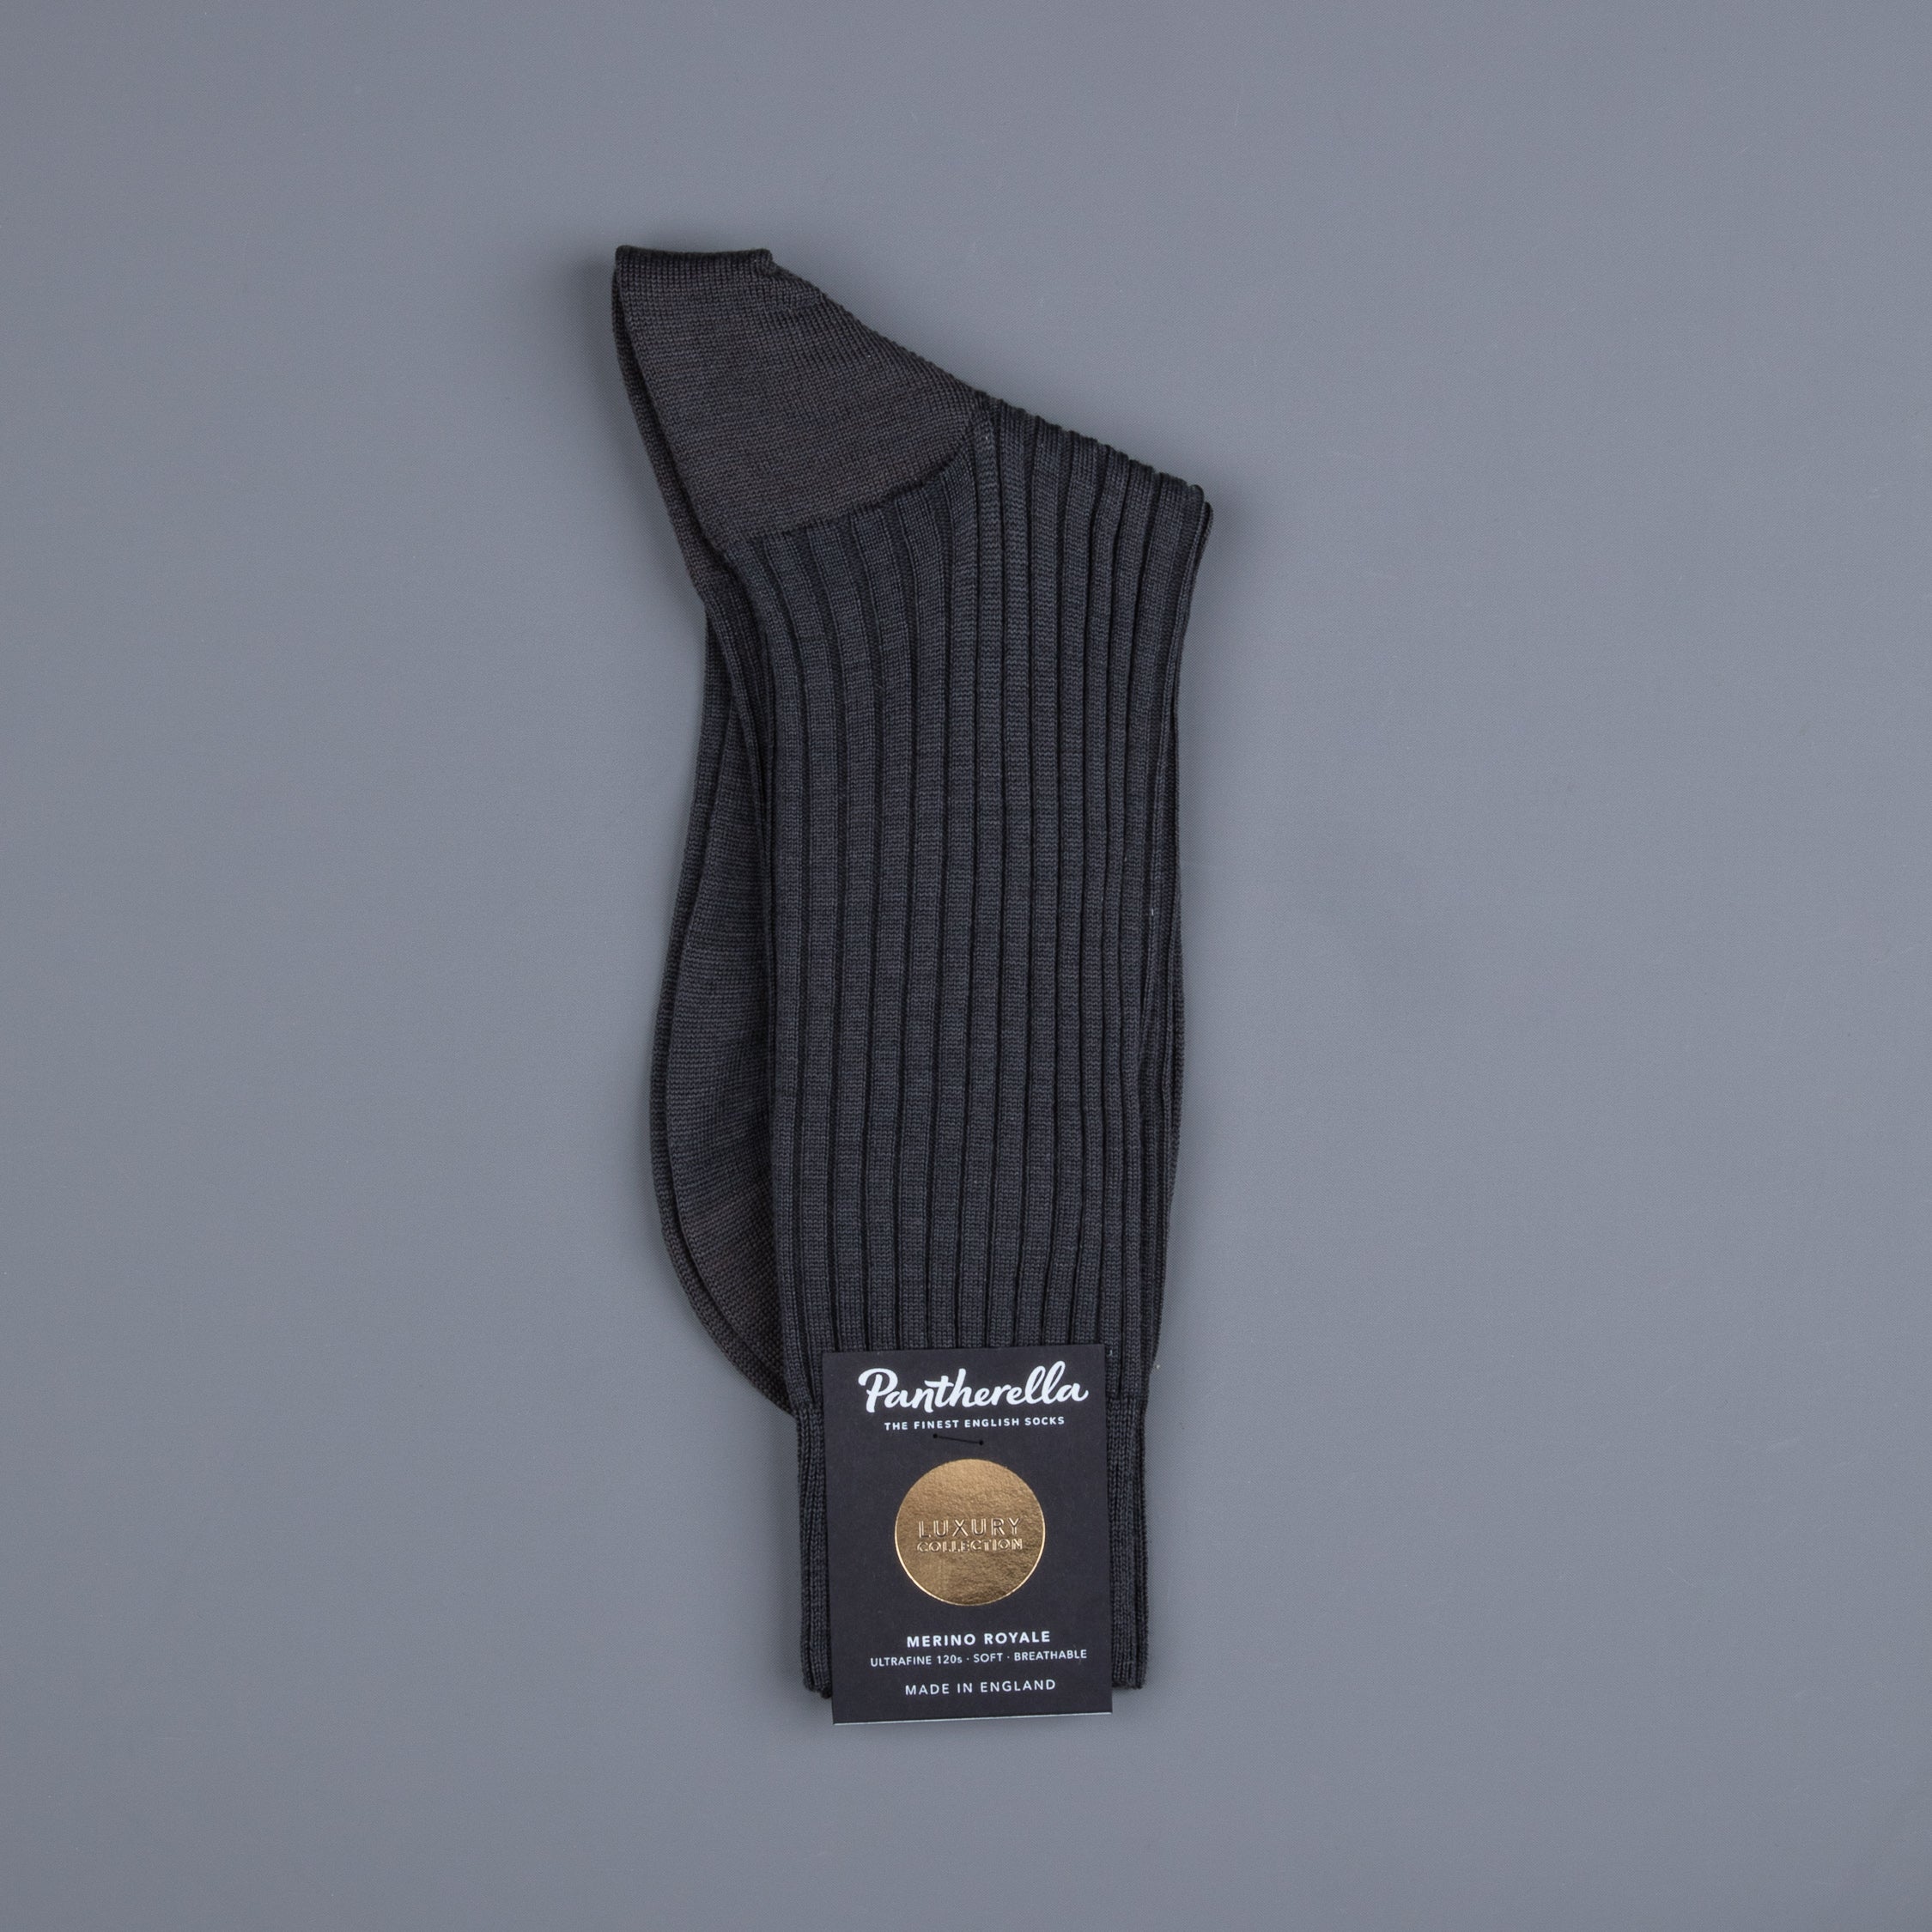 Frans Boone x Pantherella Rutherford Royal Merino Sock Dark Grey